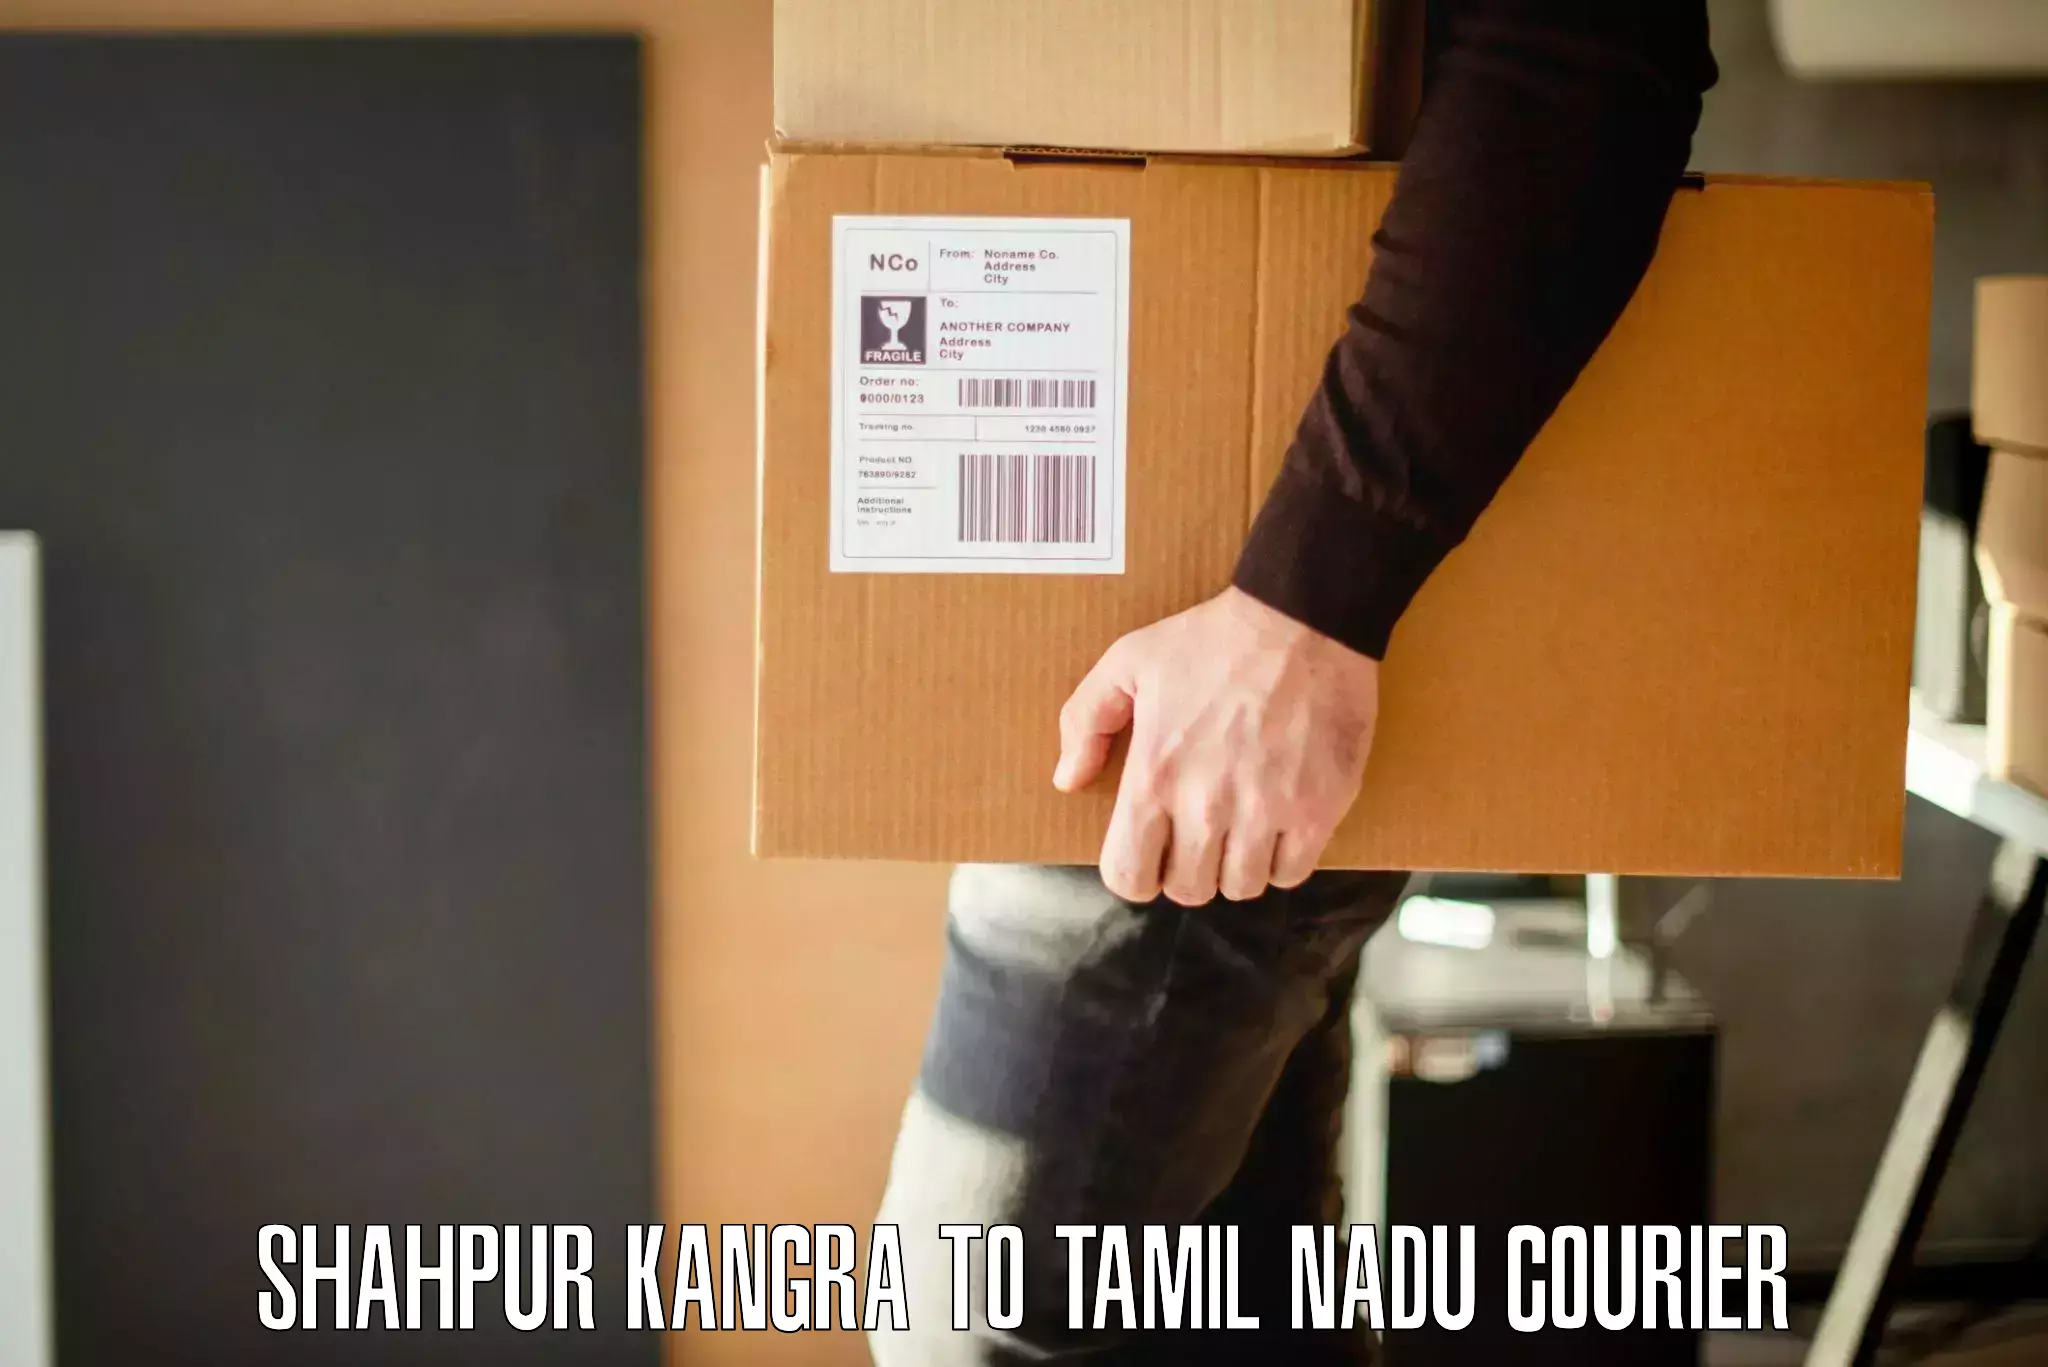 Professional moving company Shahpur Kangra to Tamil Nadu